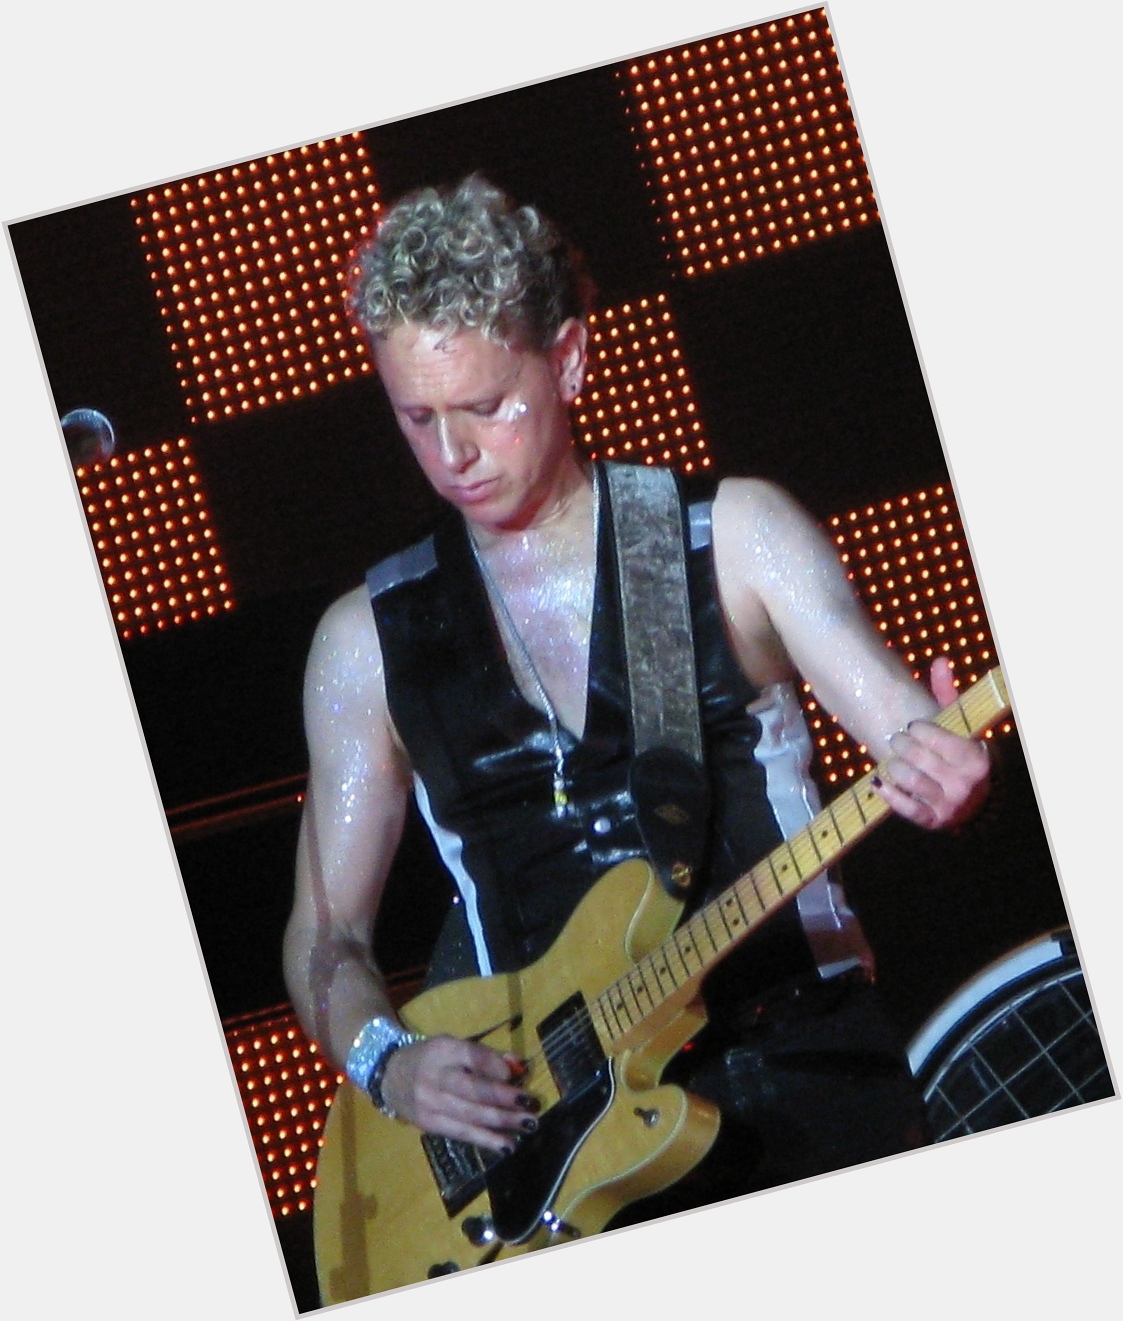 Happy Birthday to Depeche Mode\s Martin Gore, born on this day in 1961. 

Photo by Danny Darko. 